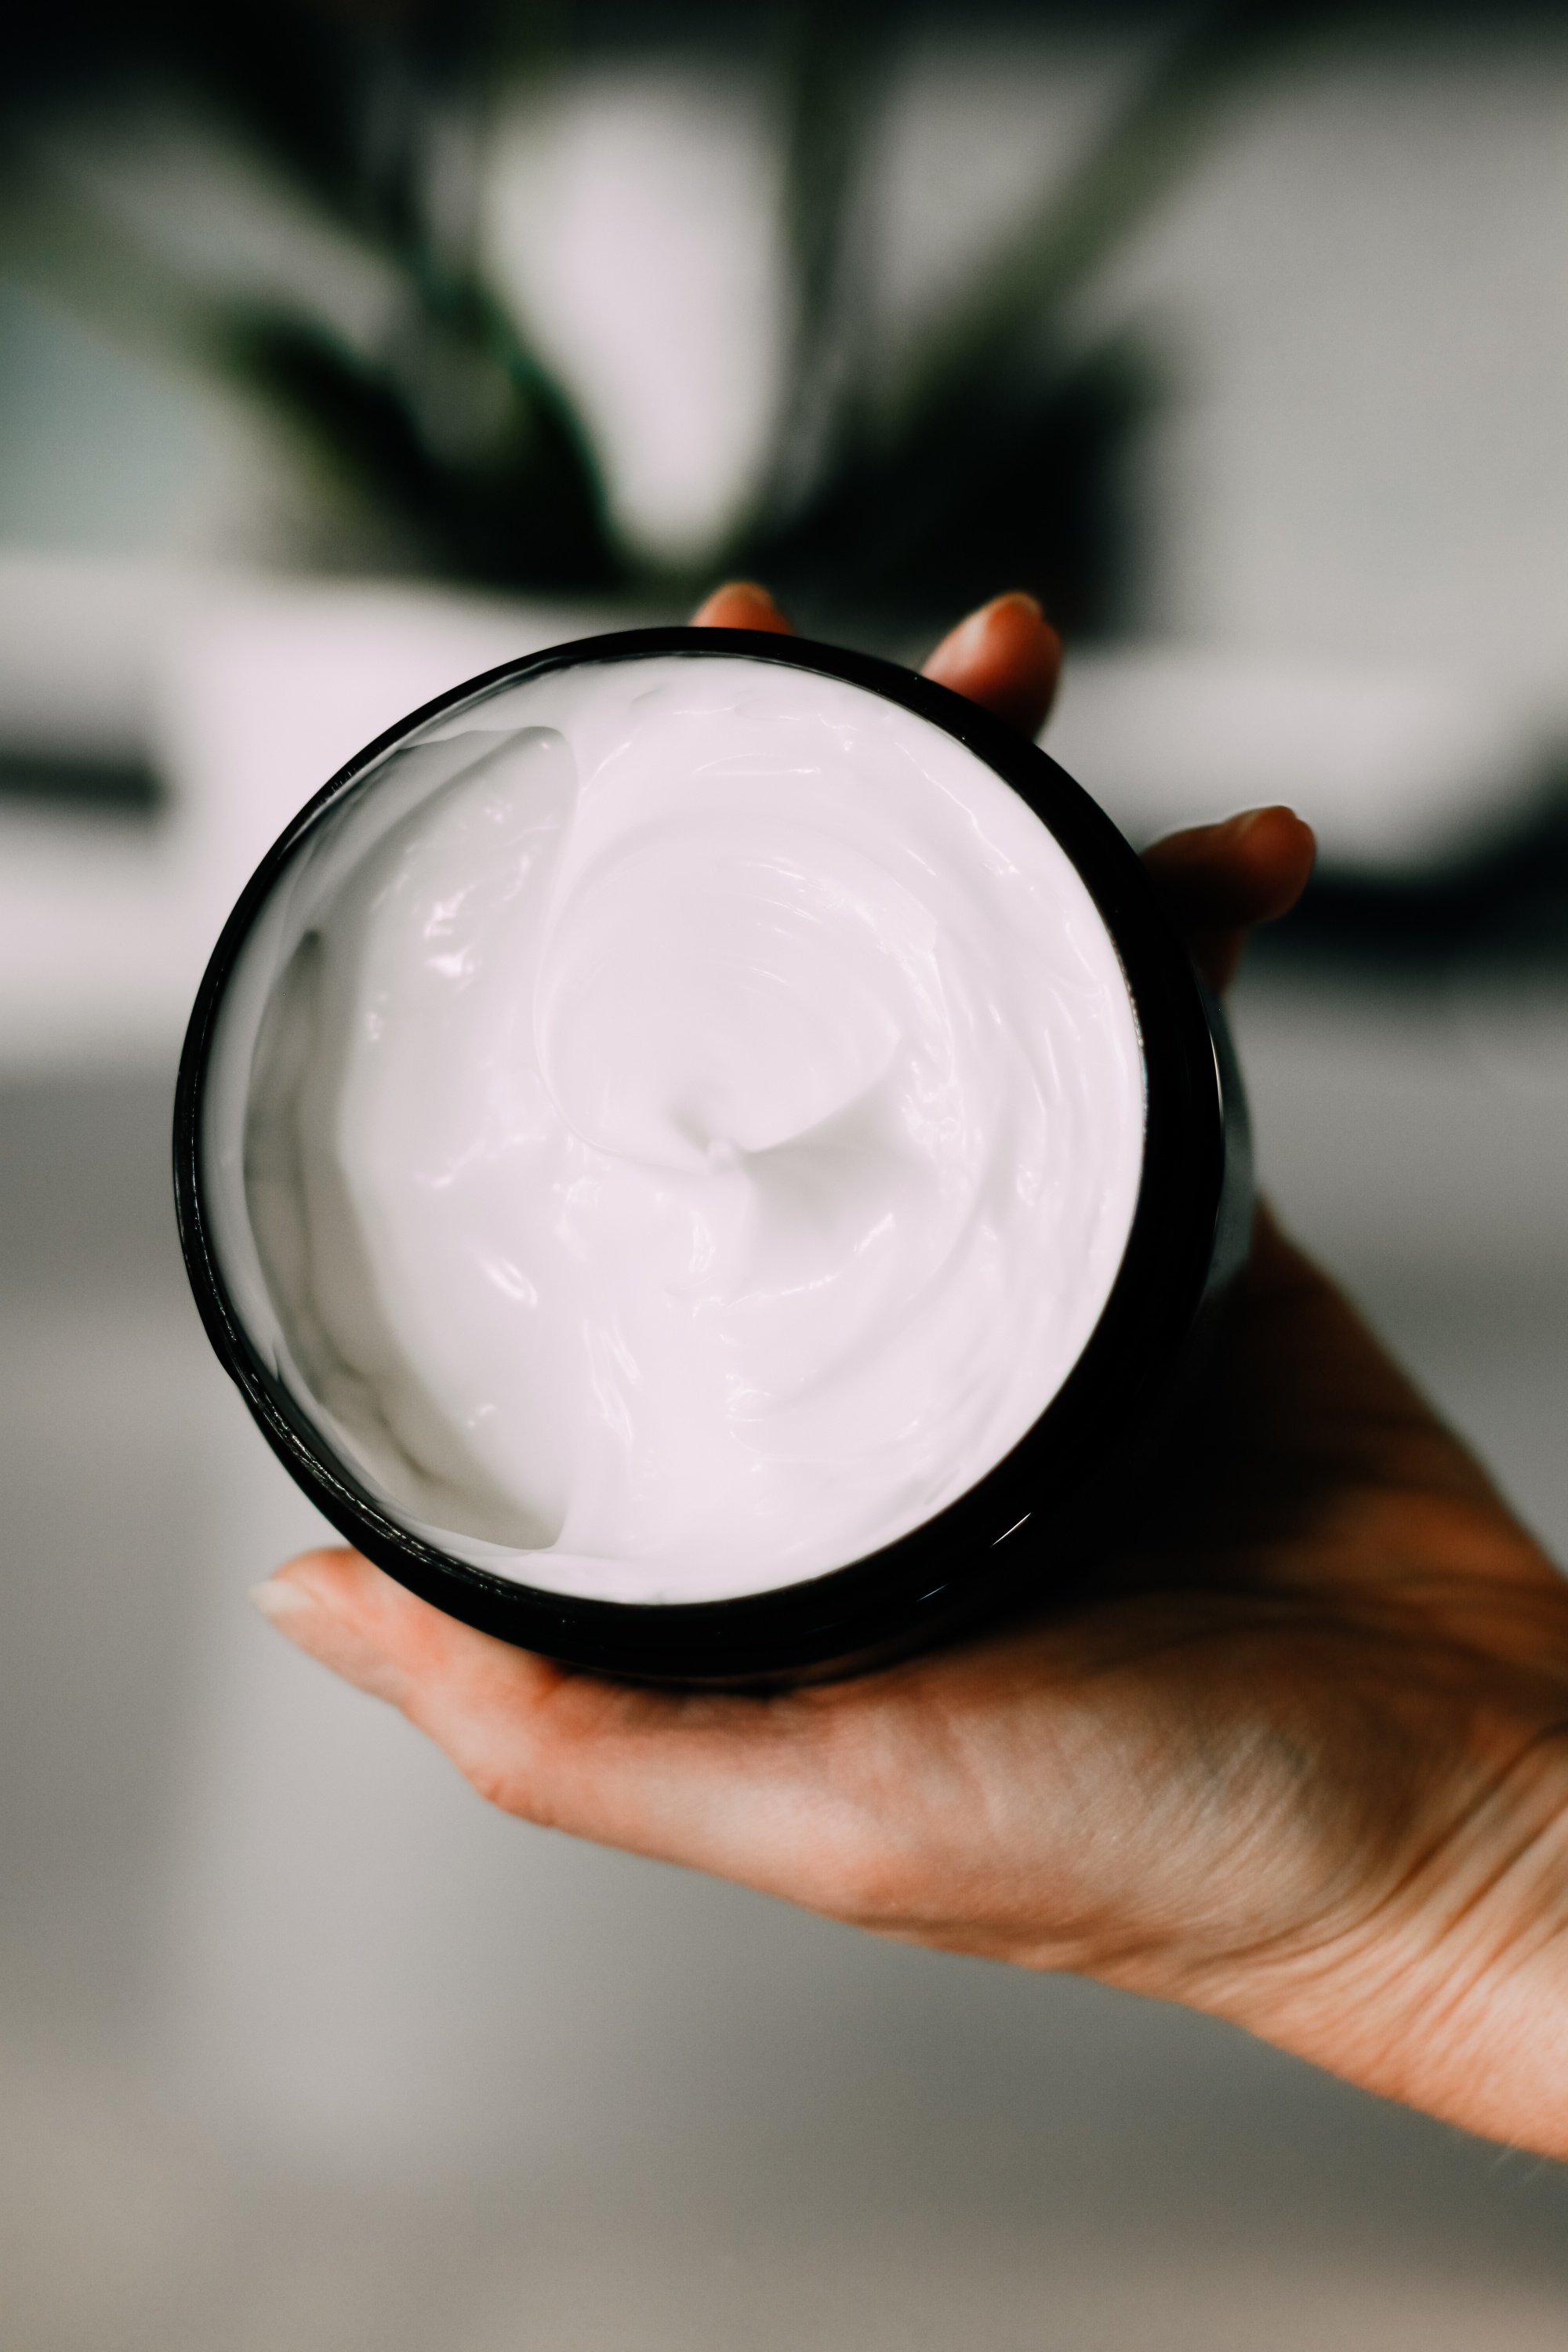 Clean beauty from walmart featuring Josie Maran body lotion in vanilla